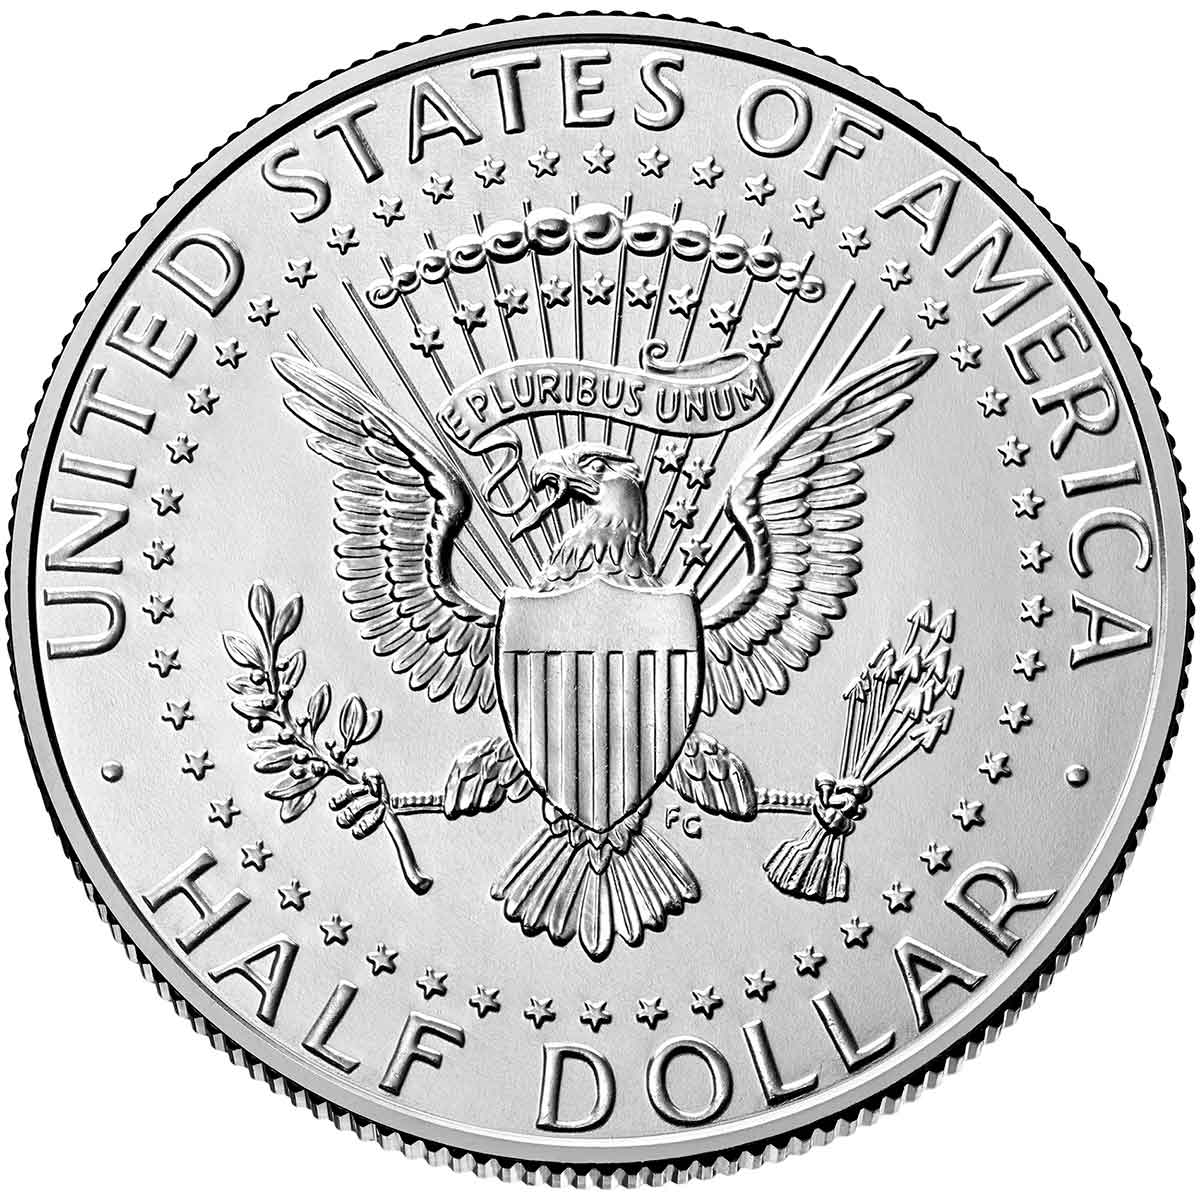 2021 Kennedy Half Dollar, reverse. Image courtesy United States Mint